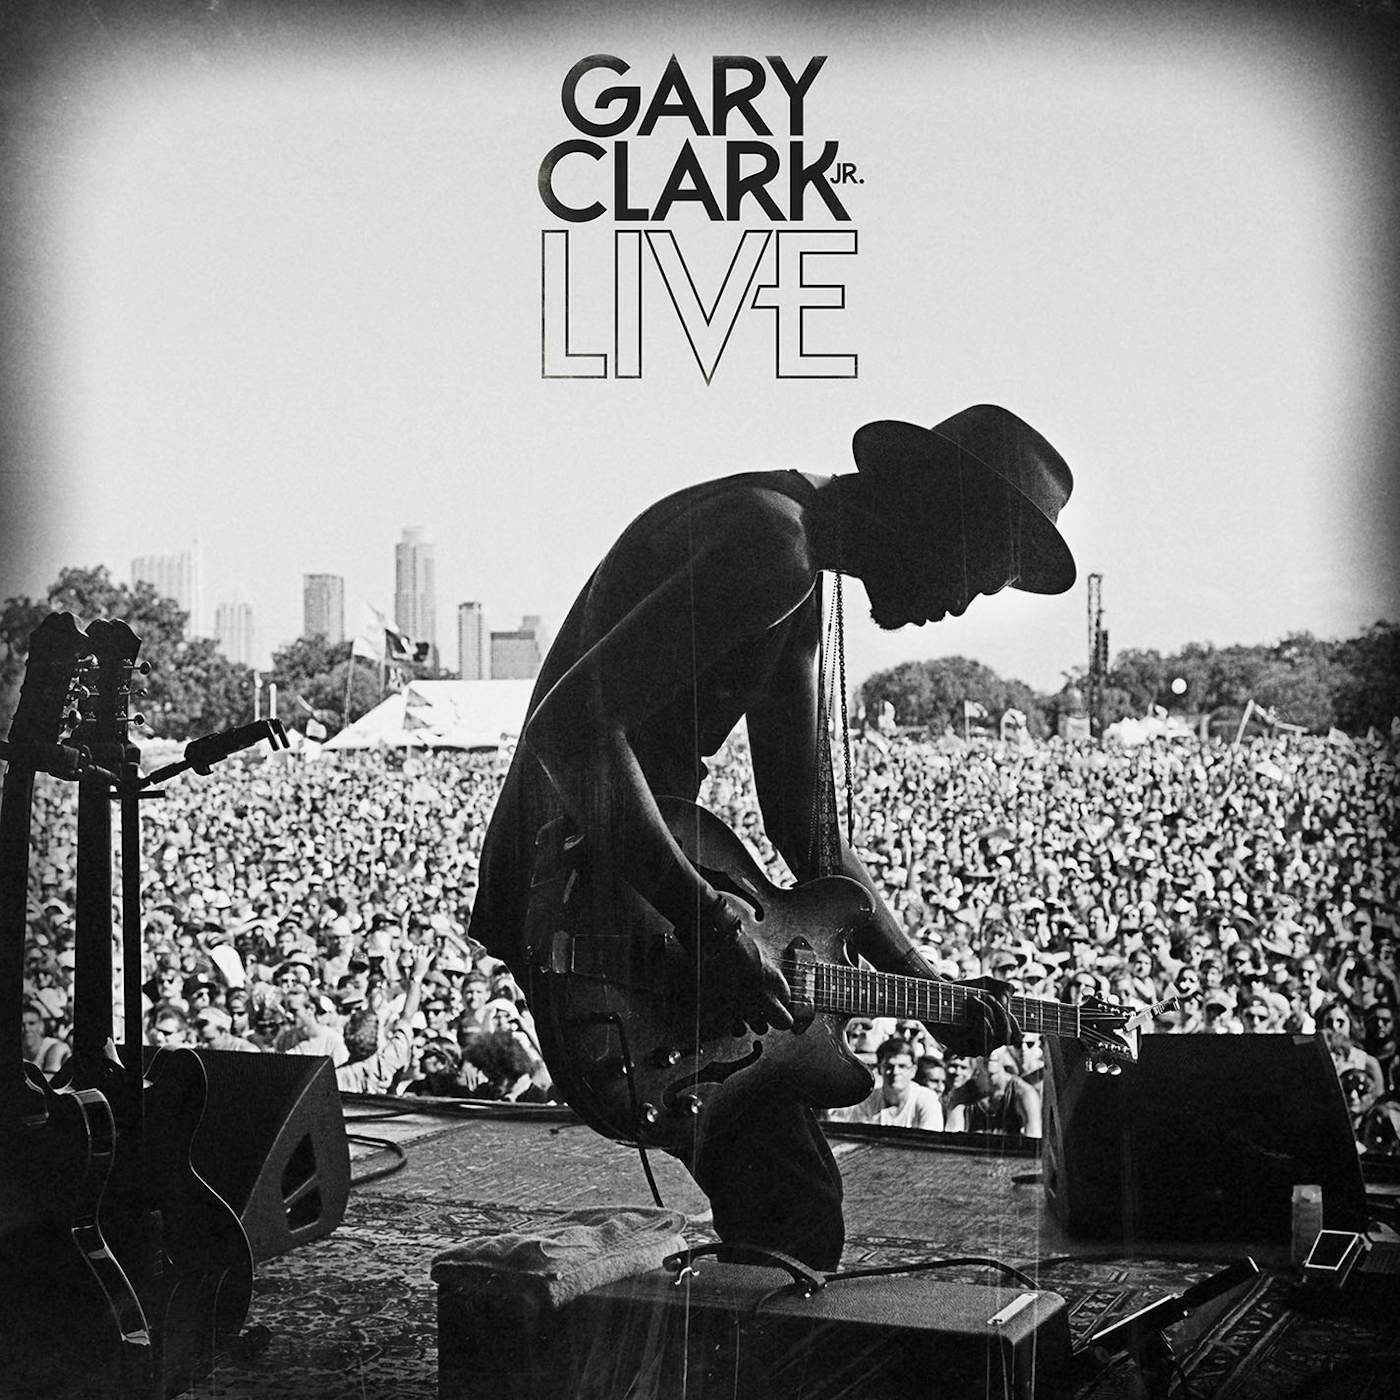 Gary Clark Jr. LIVE CD